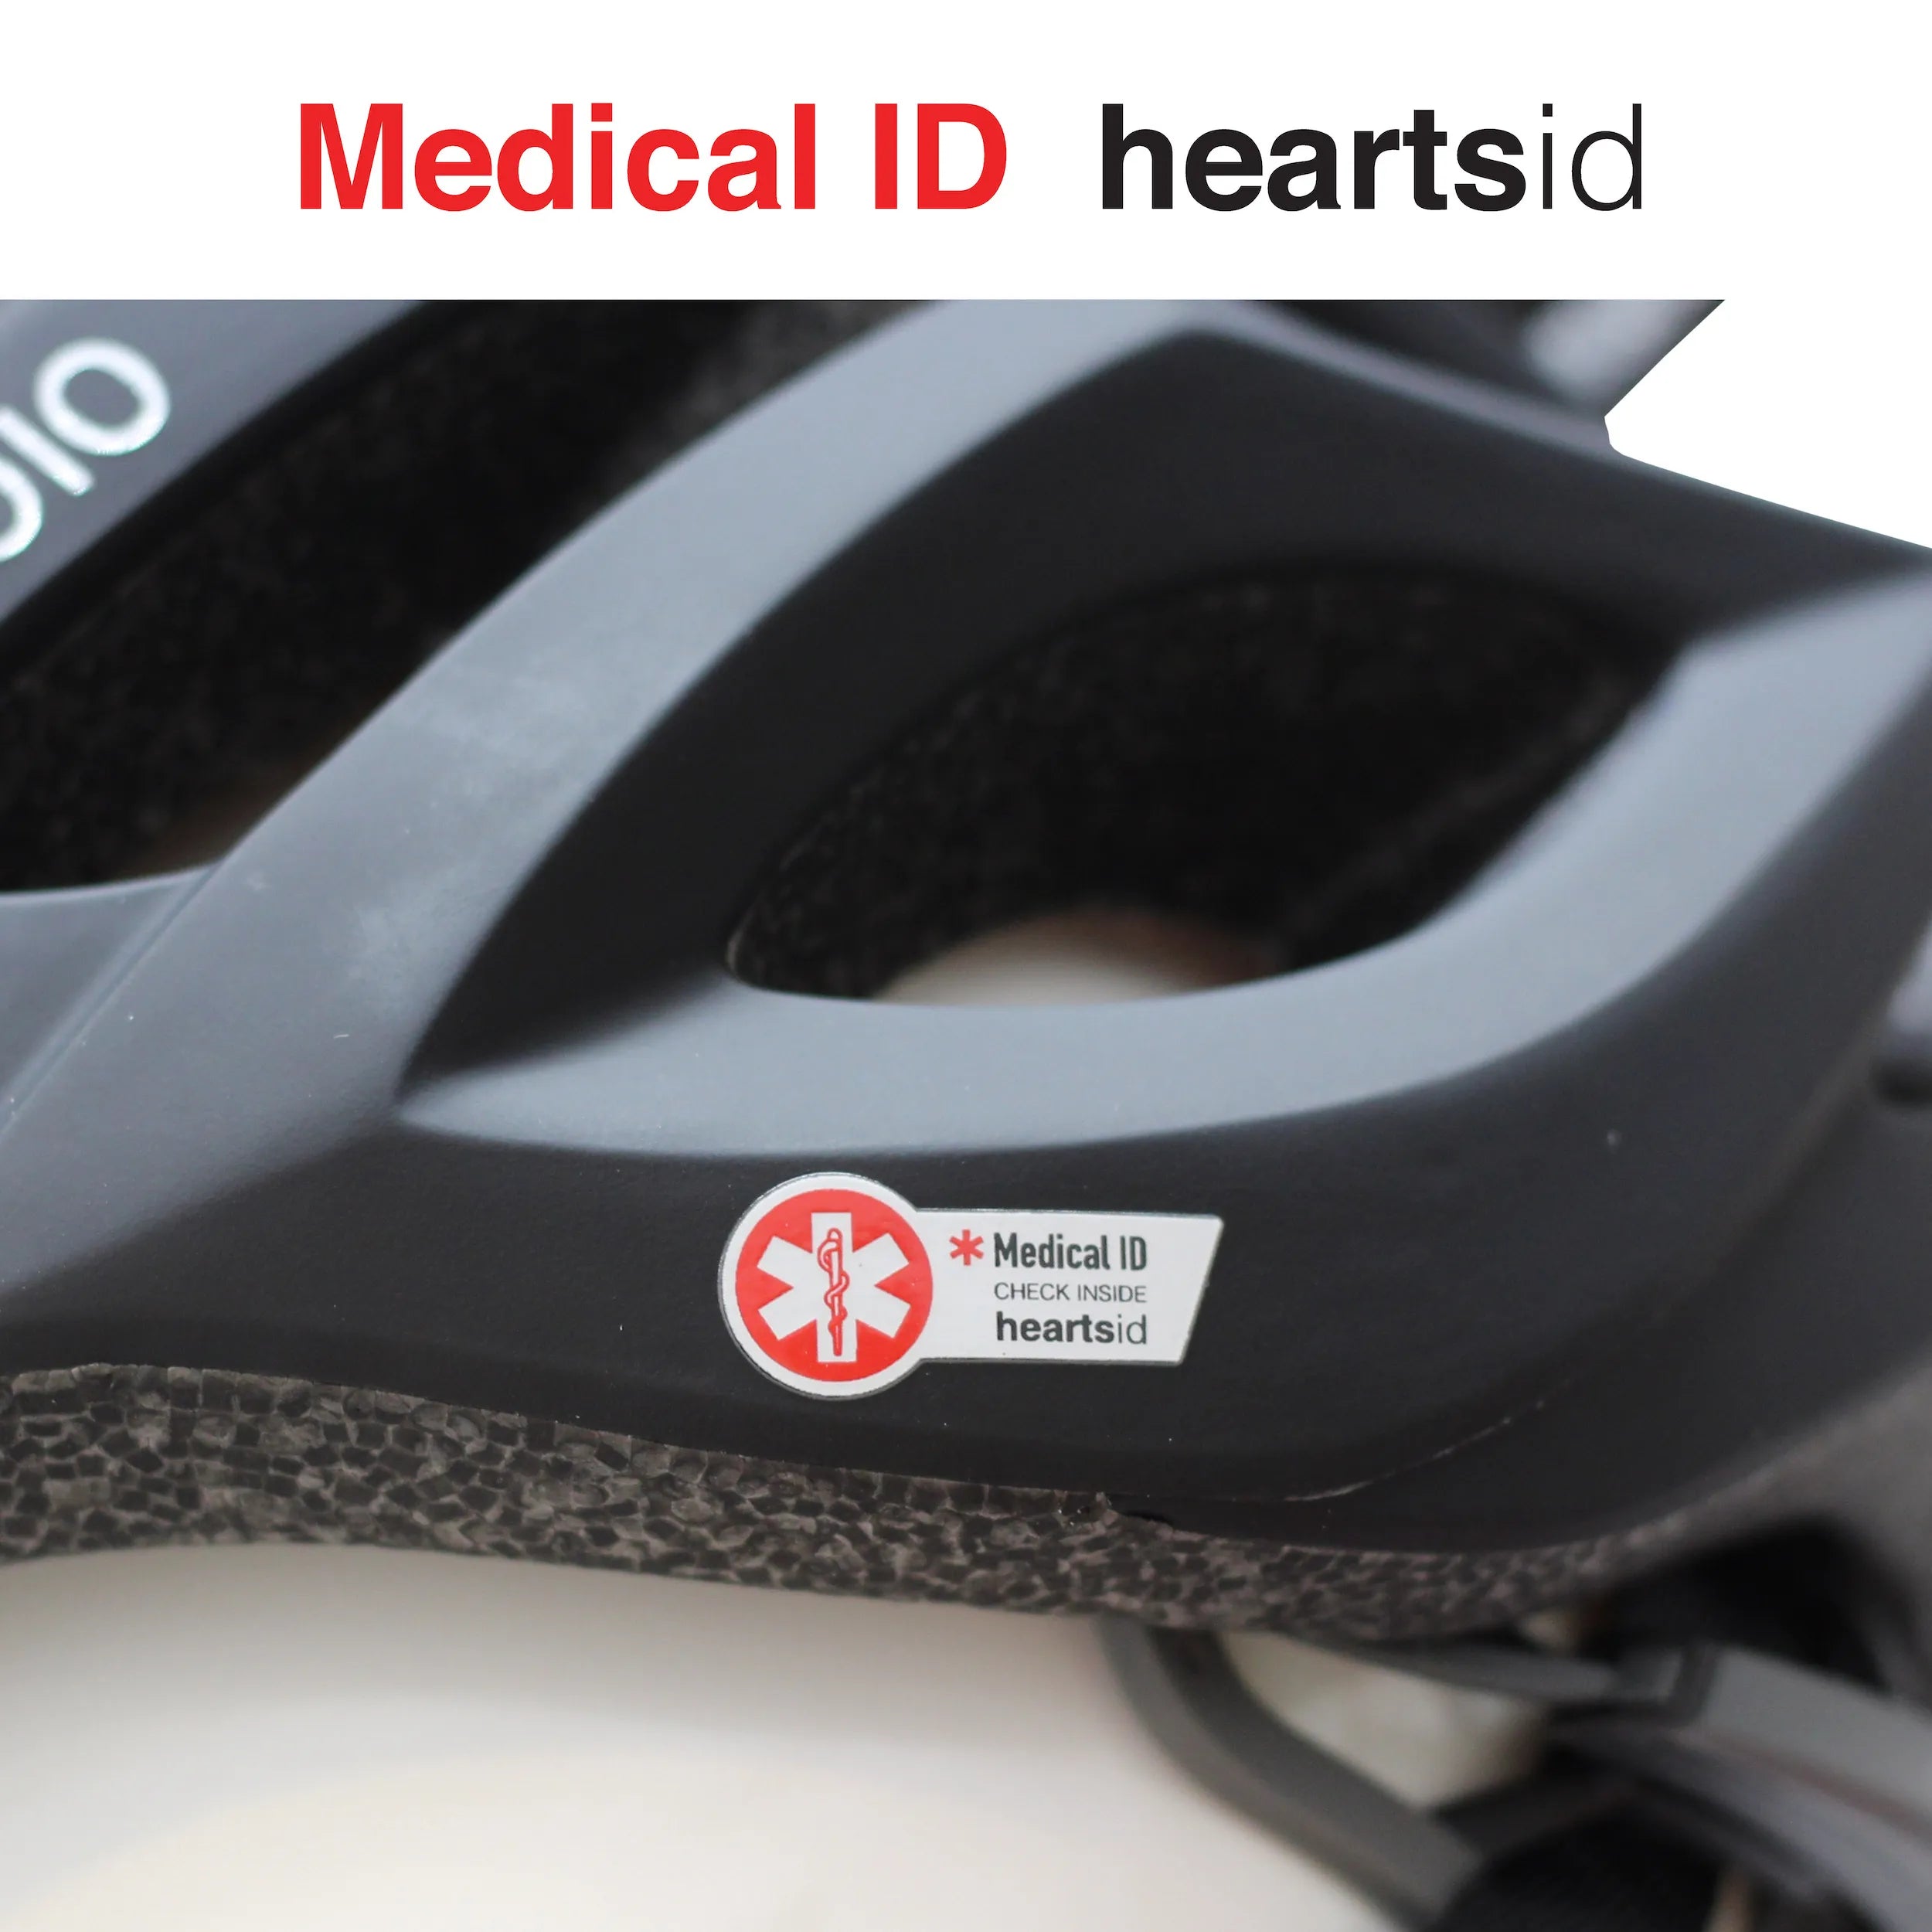 HeartsHelmet - Bike Helmet with Health ID Card and Health Status Stickers HeartsID